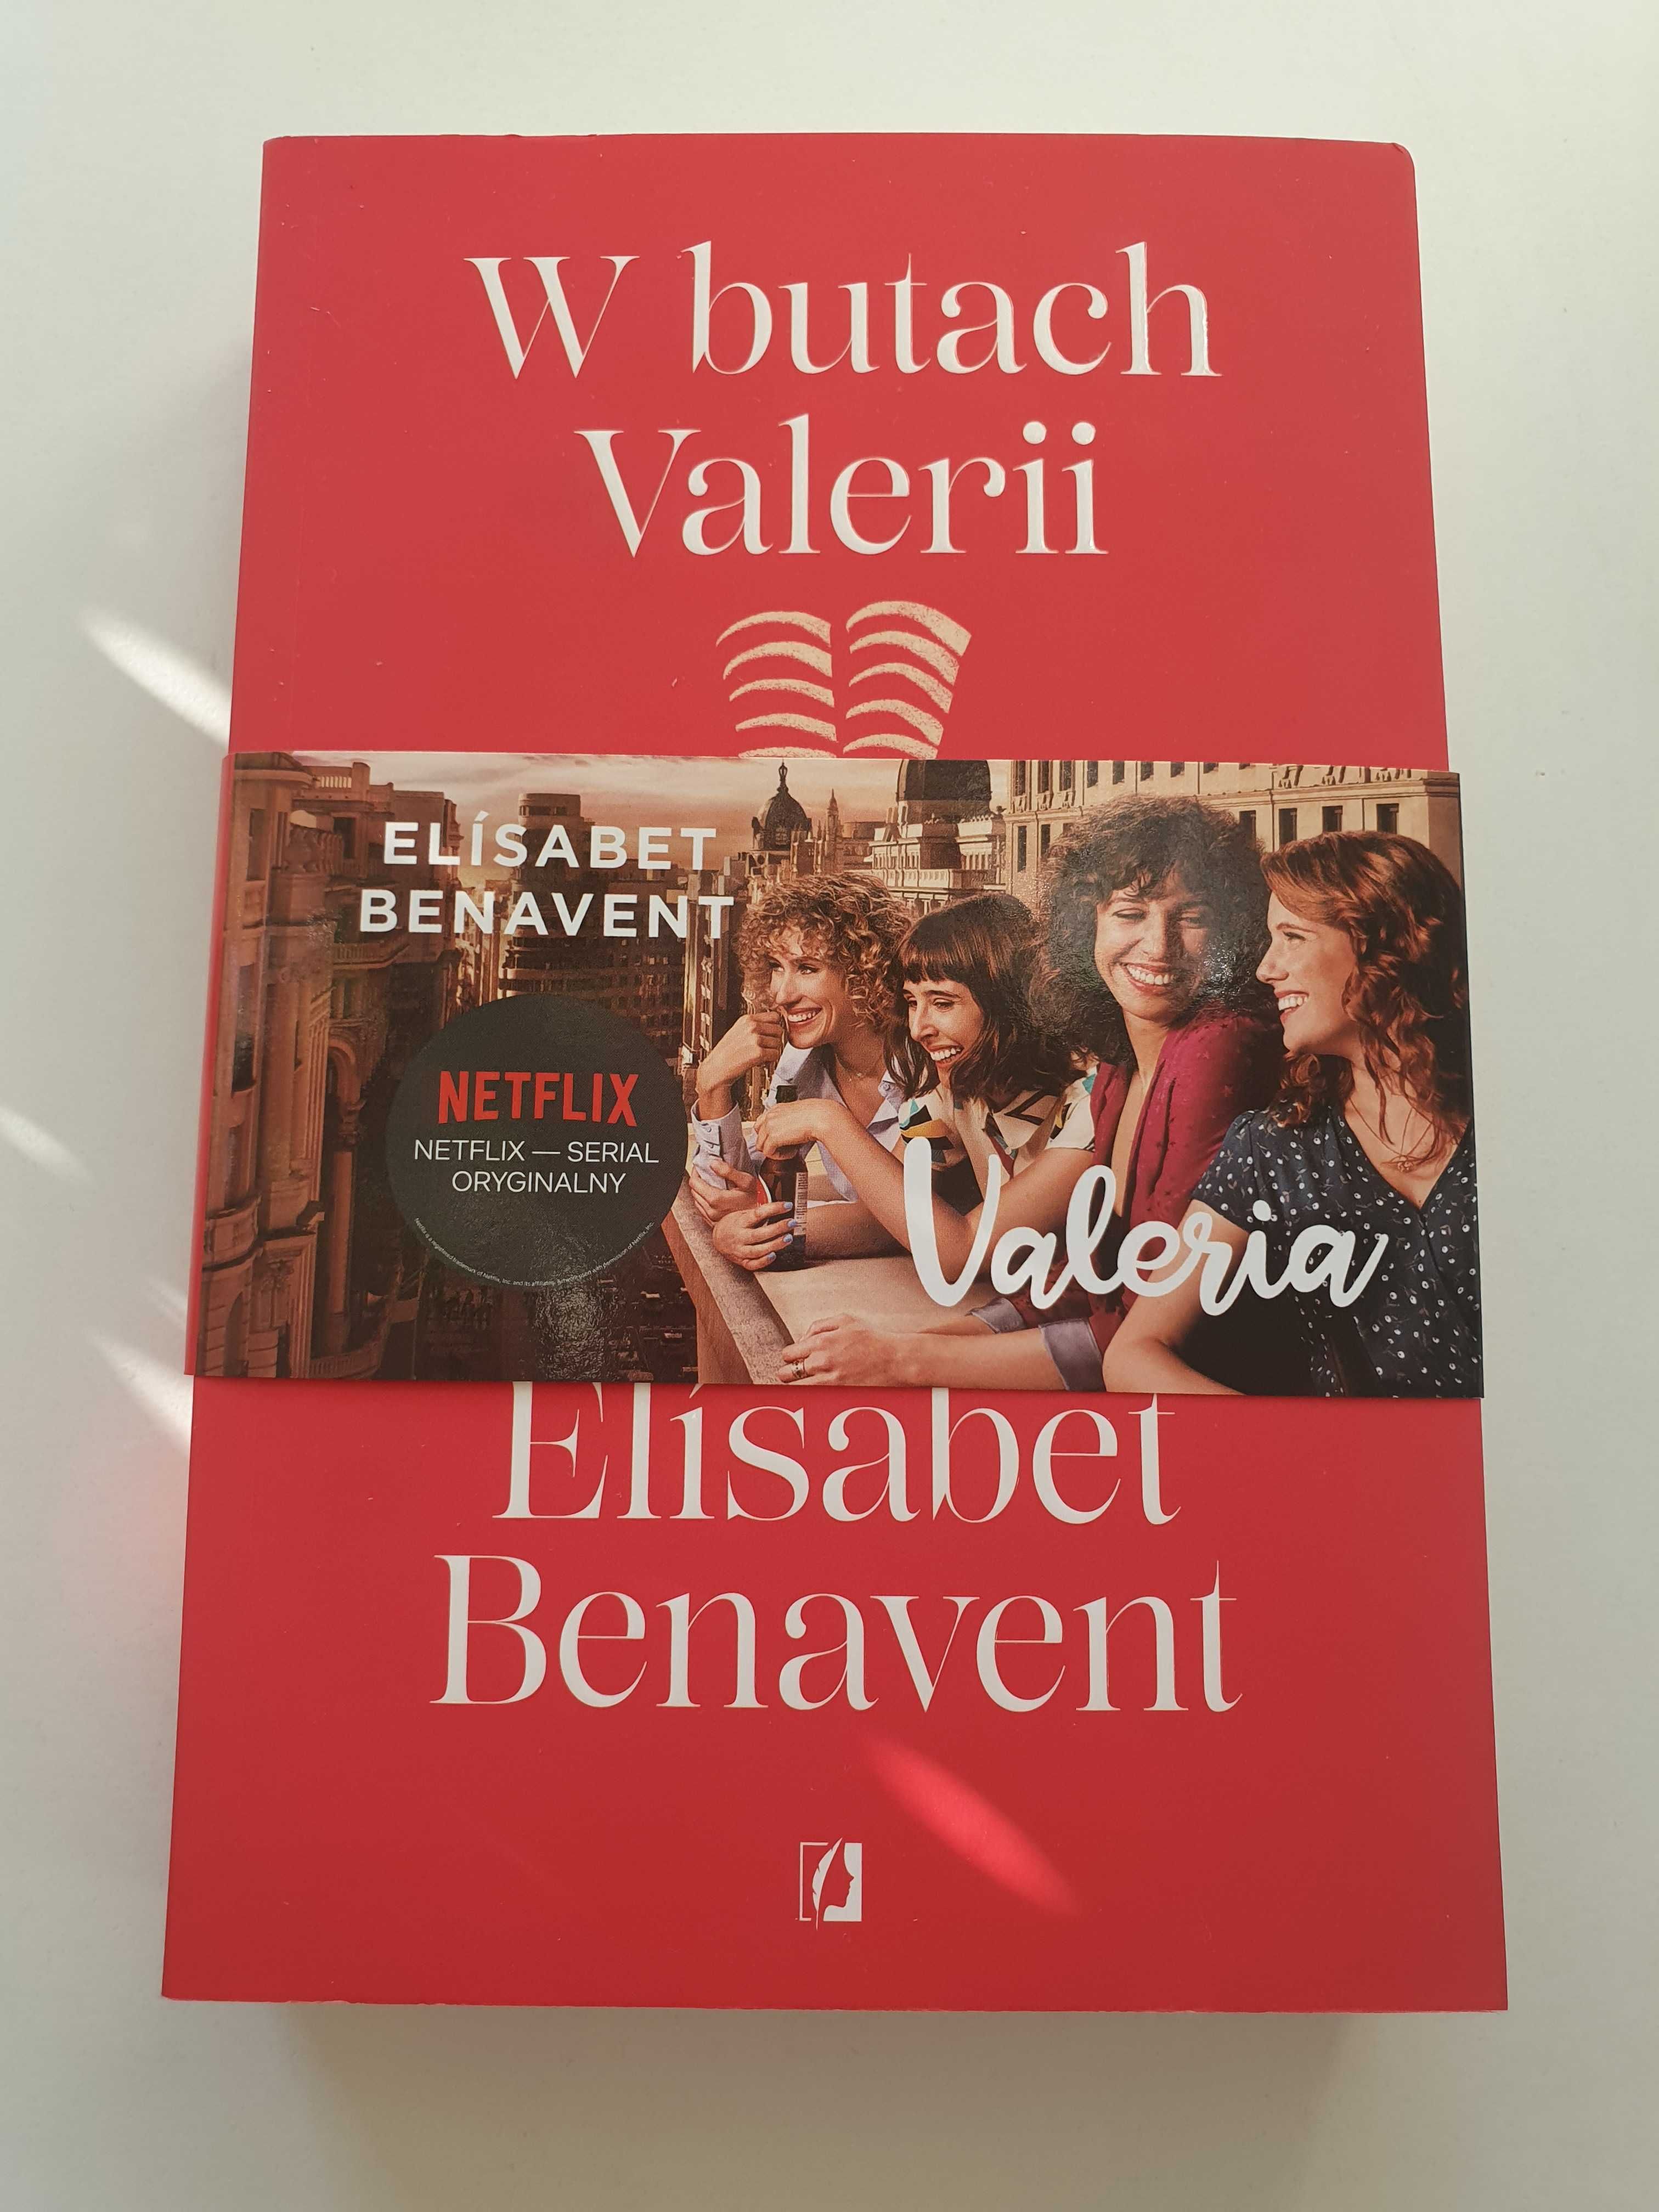 W butach Valerii - Elisabet Benavent